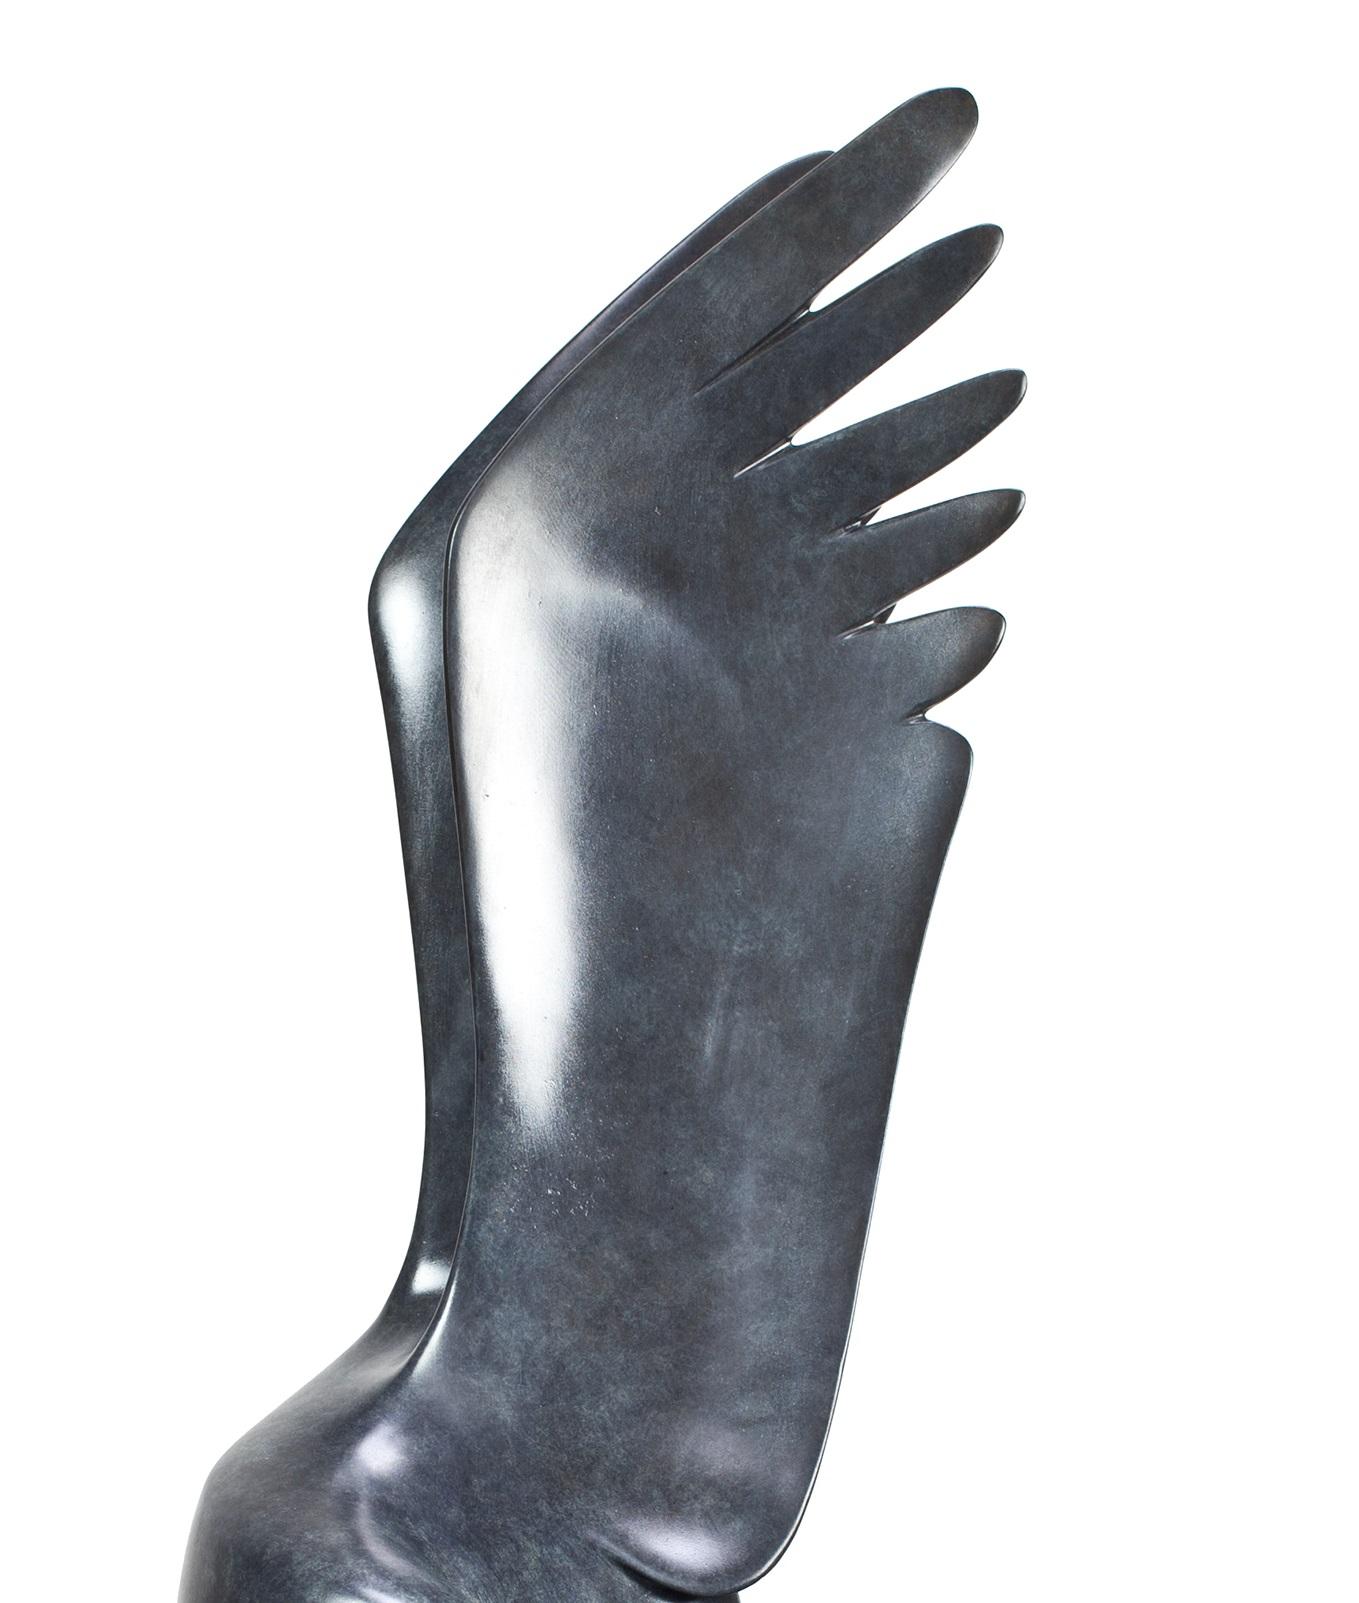 Roofvogel Klein Prey Bird Small Bronze Sculpture Wild Animal Limited Edition For Sale 1